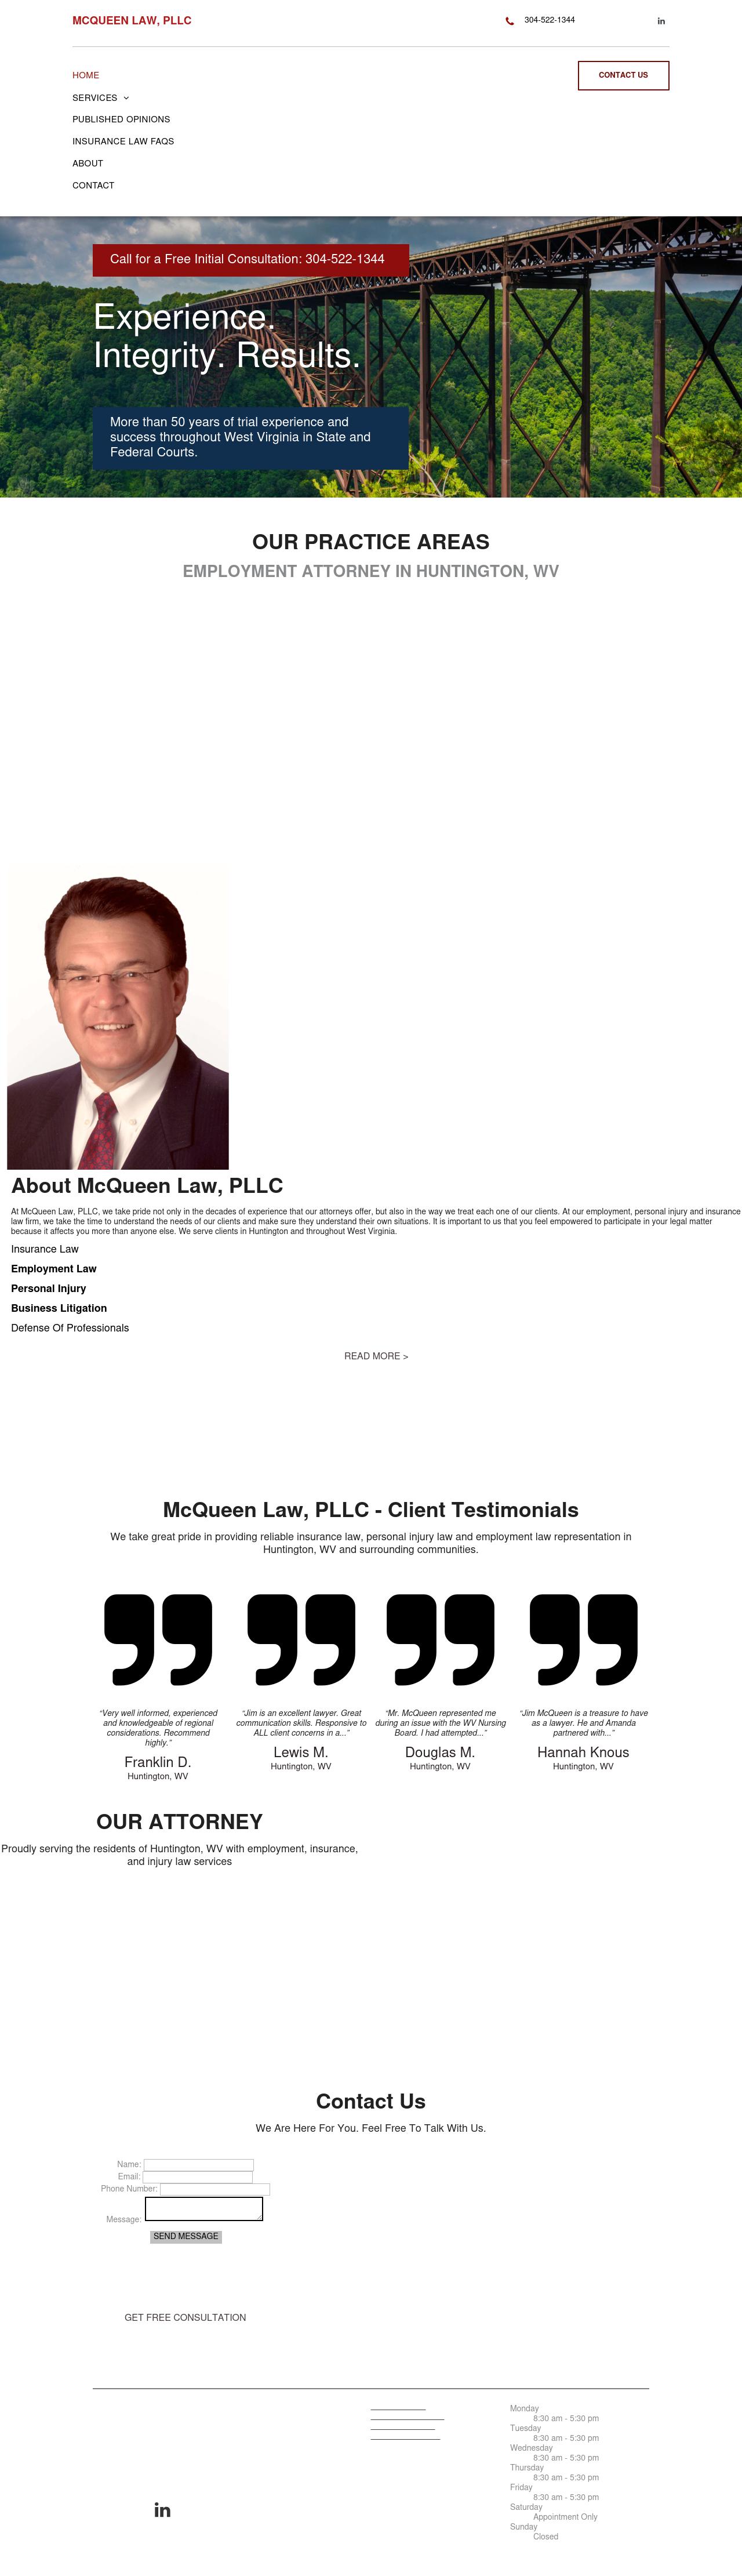 McQueen Davis PLLC - Huntington WV Lawyers